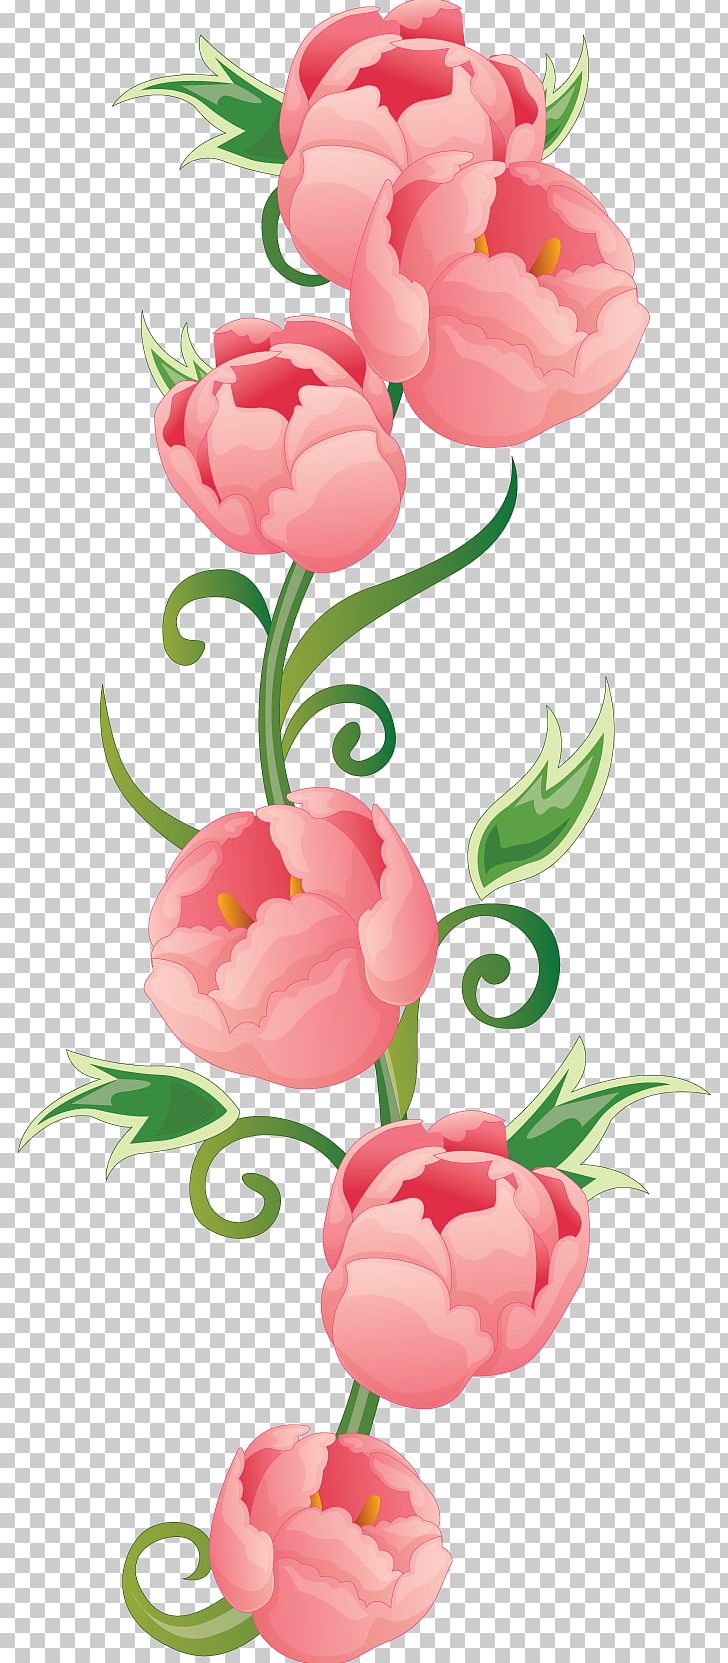 Rose Flower PNG, Clipart, Blue Rose, Cut Flowers, Download, Floral Design, Floristry Free PNG Download